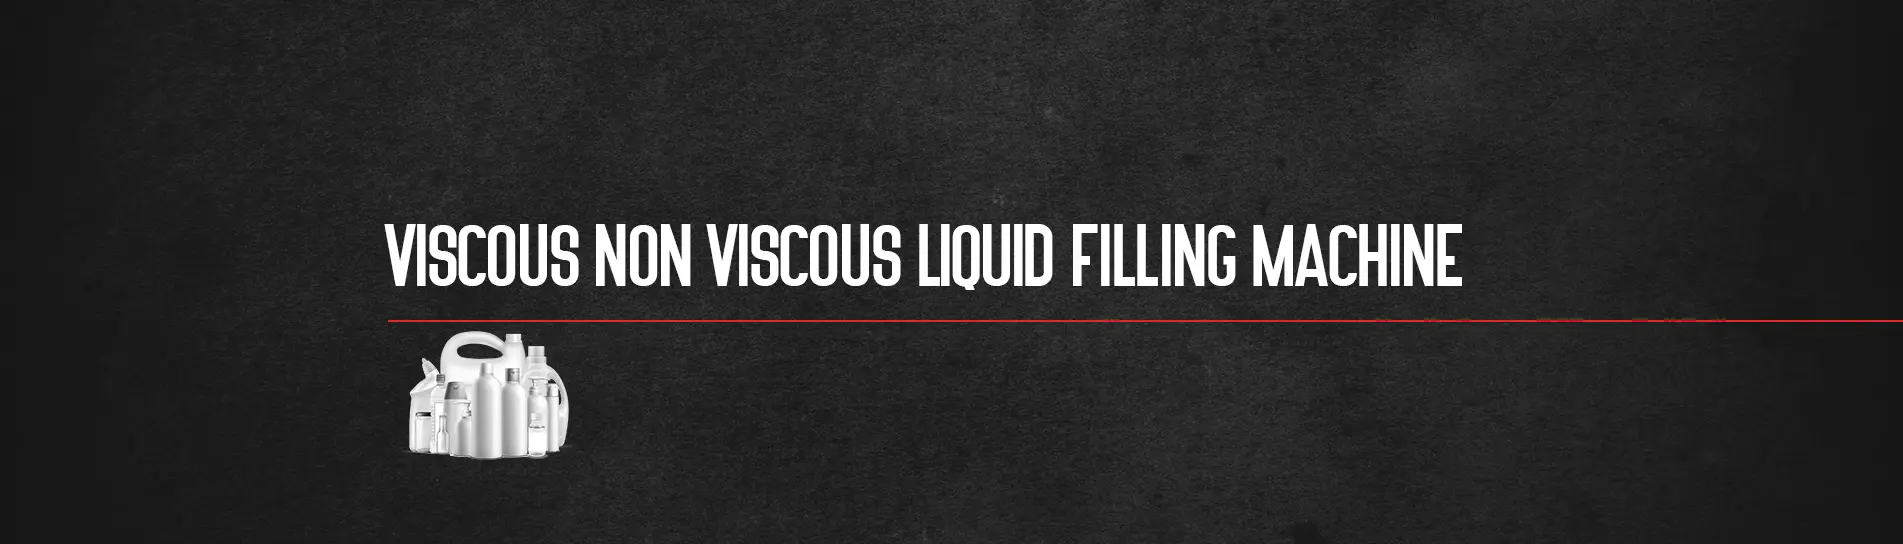 viscous/non-viscous-liquid-filling-machine